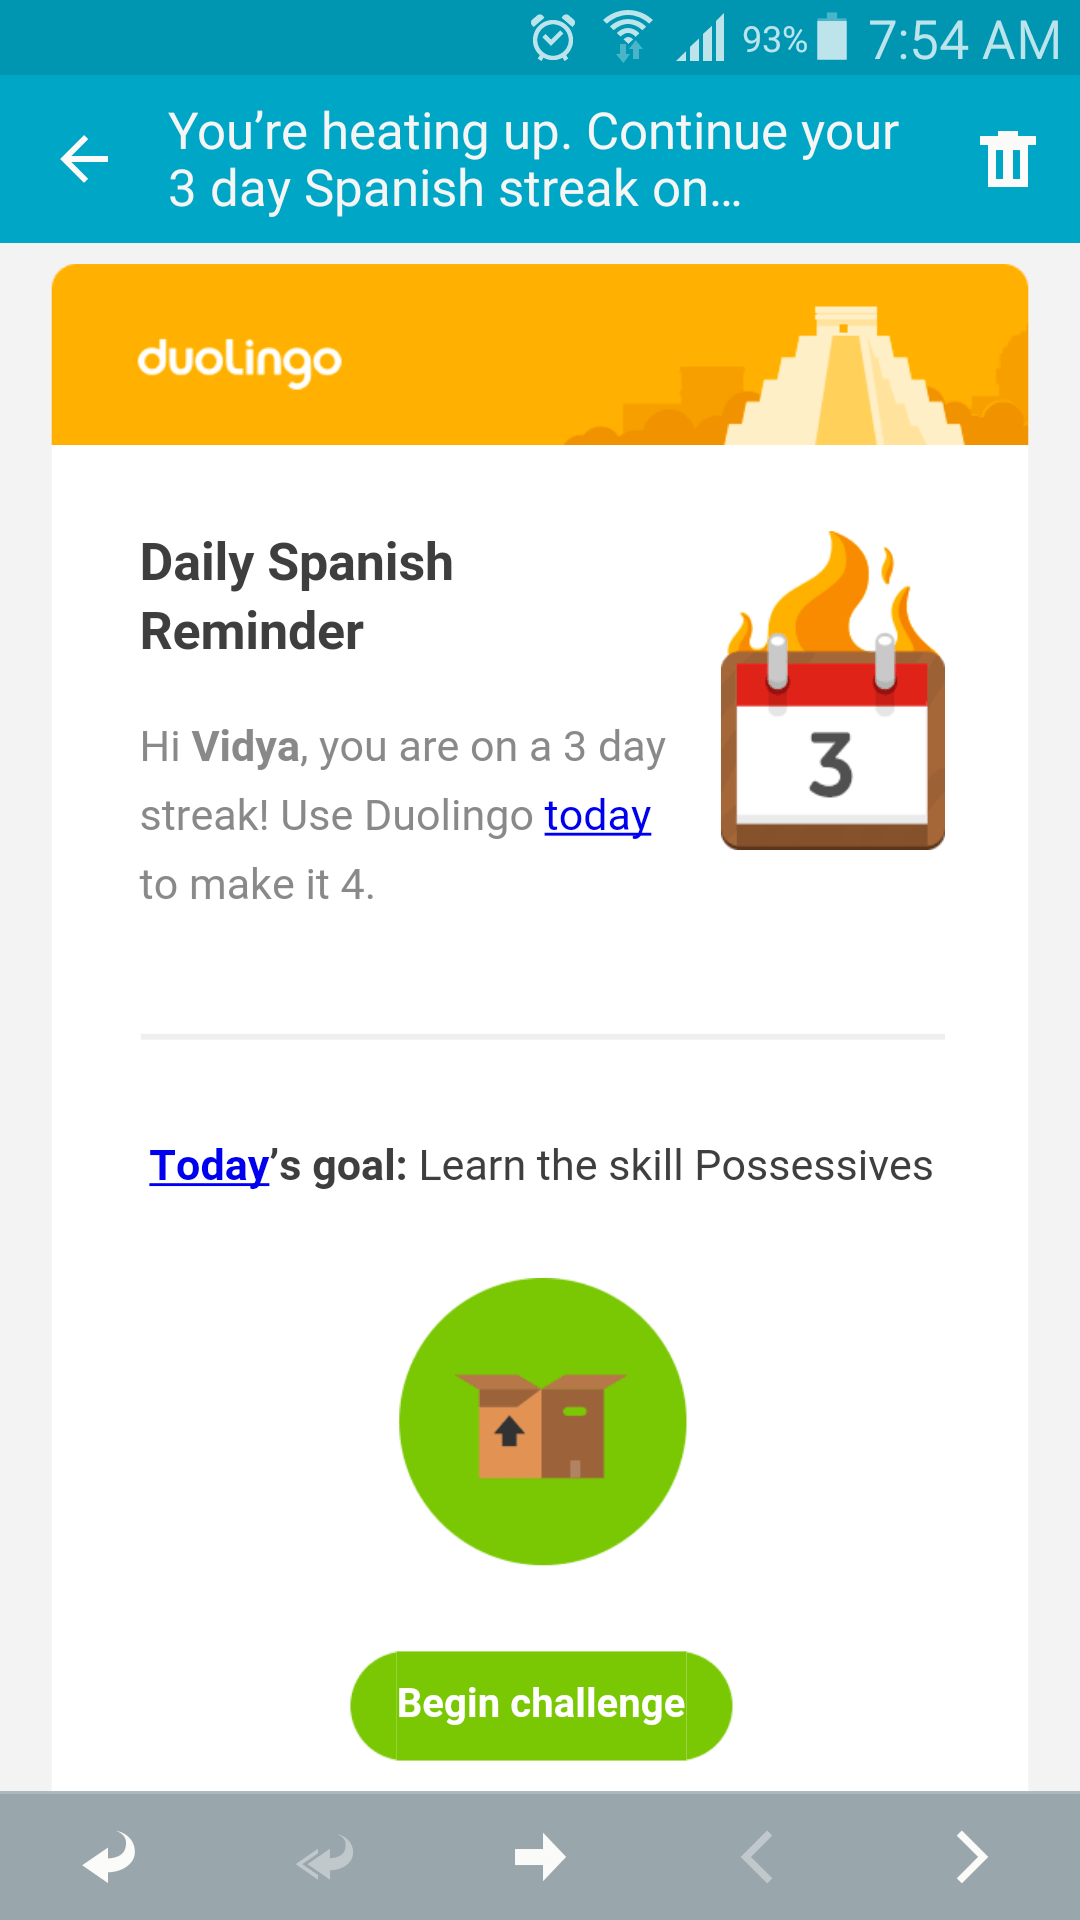 Learnnovators_Duolingo_Reminder